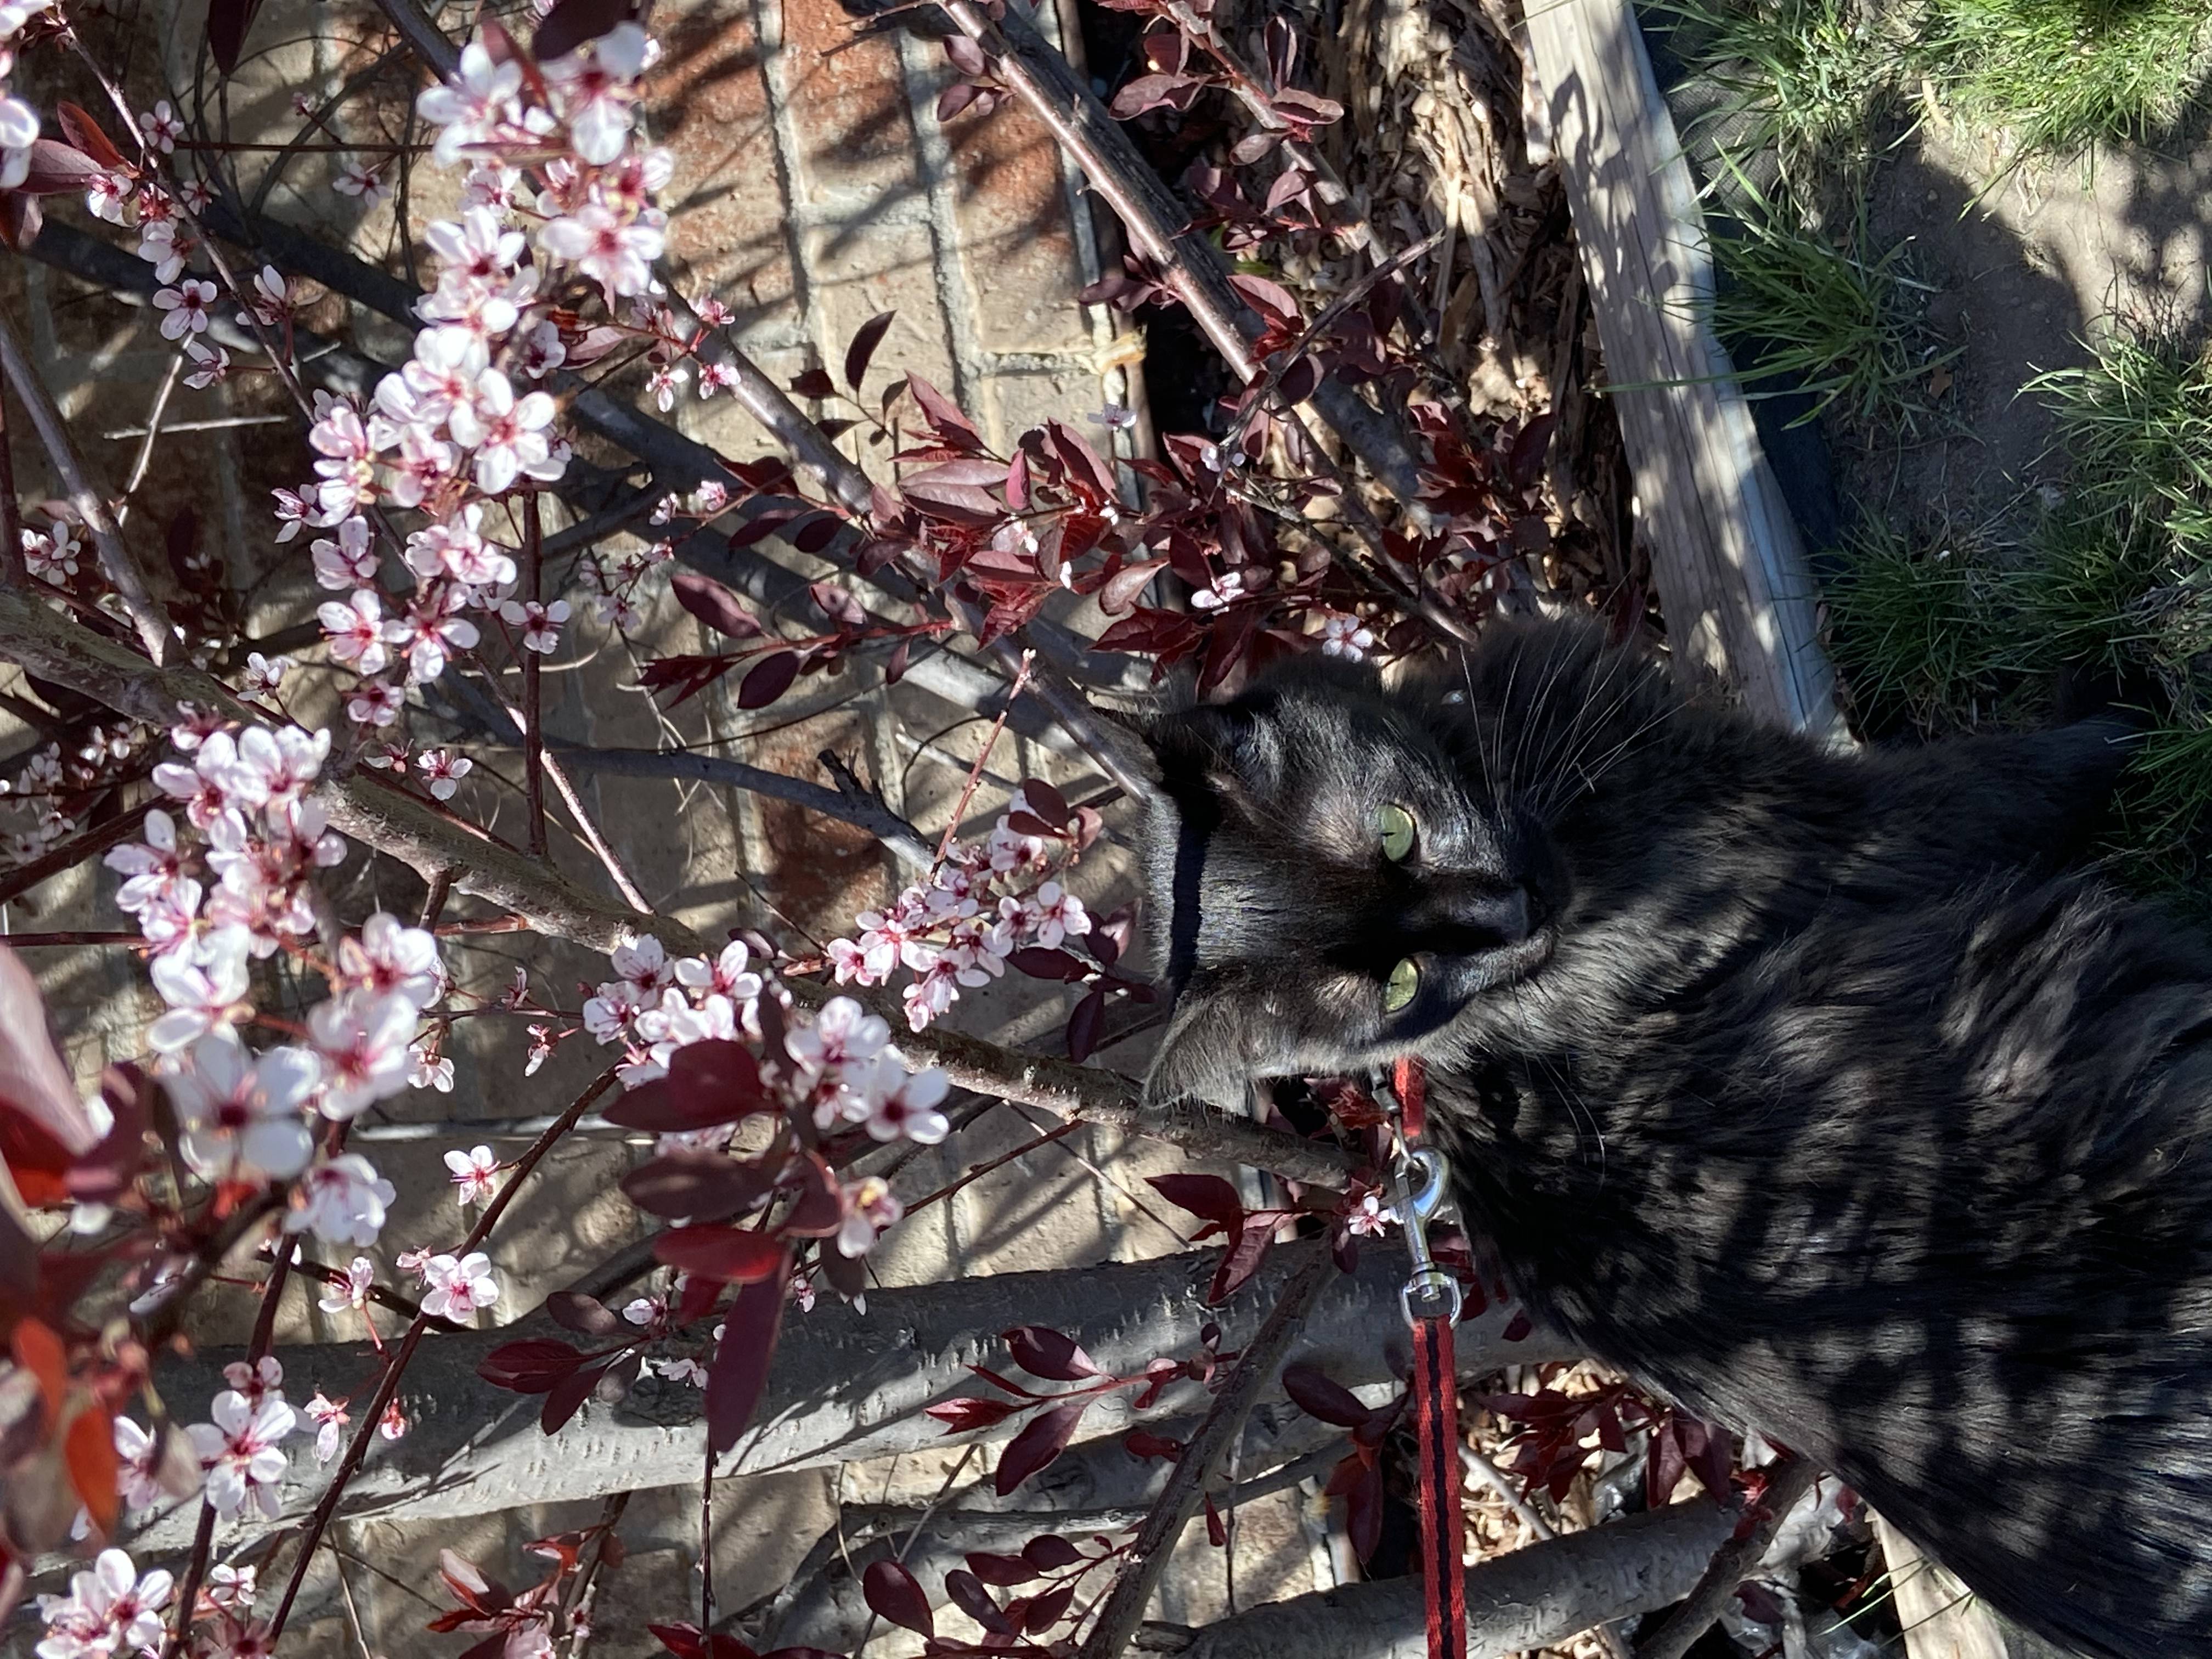 black cat on a leash under a flowering bush